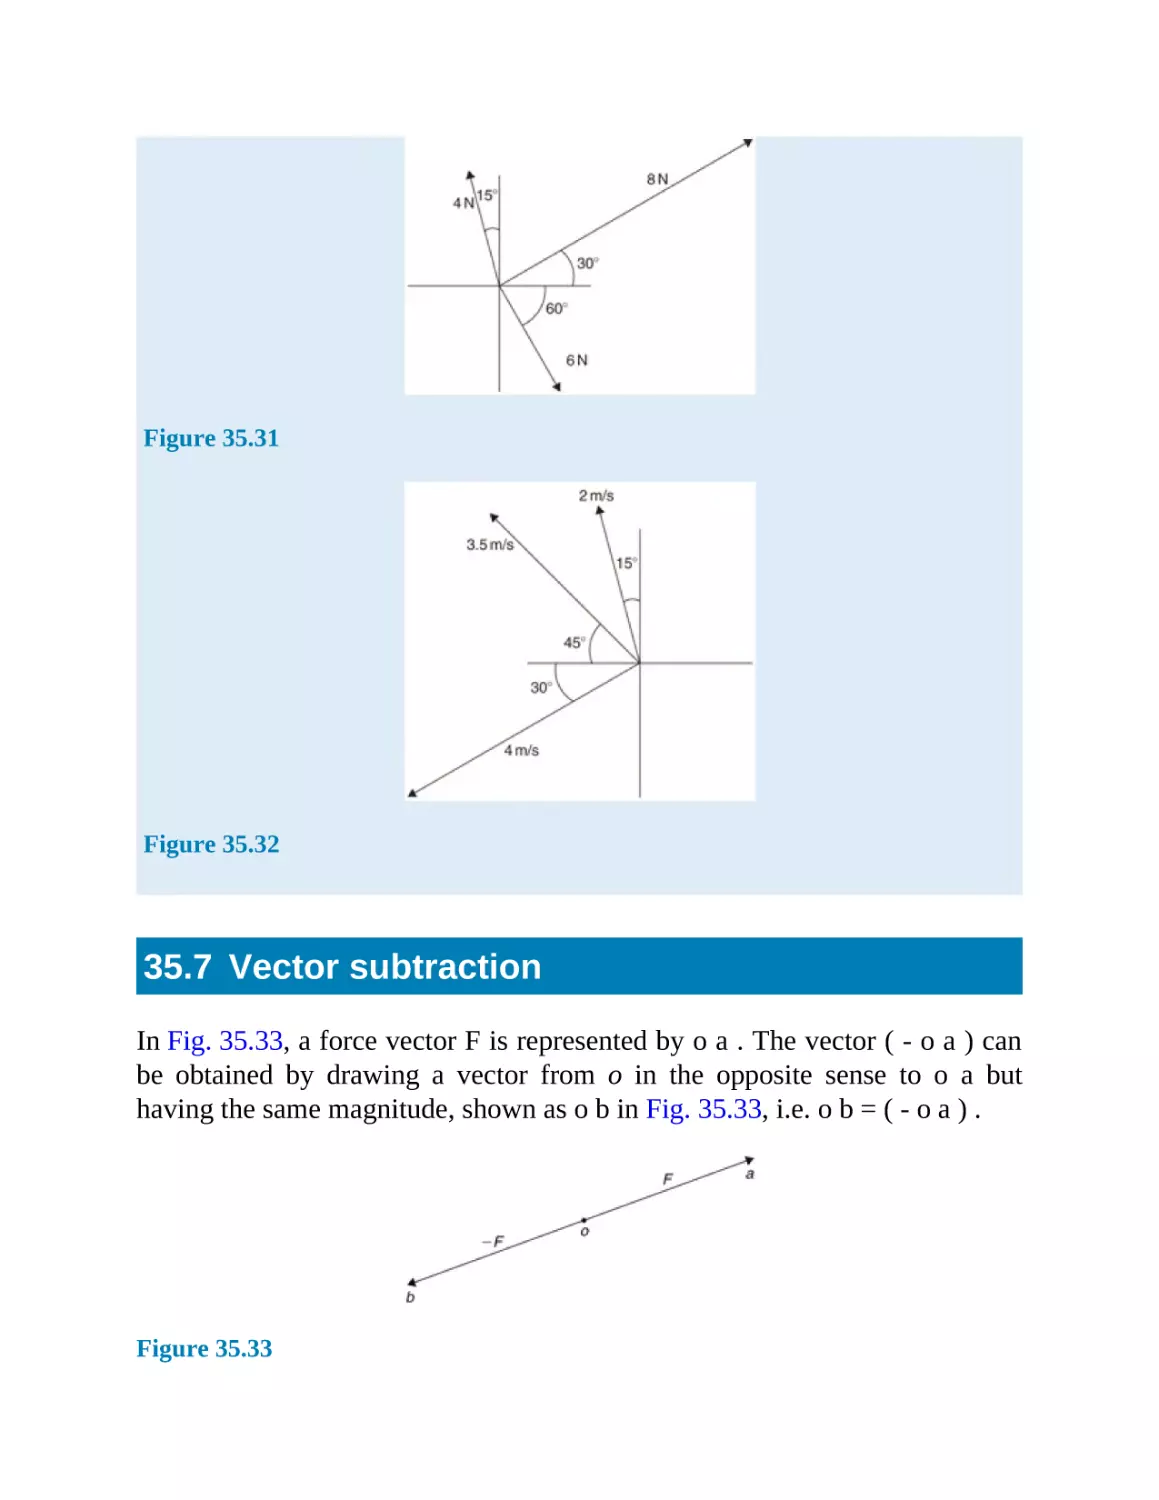 35.7 Vector subtraction